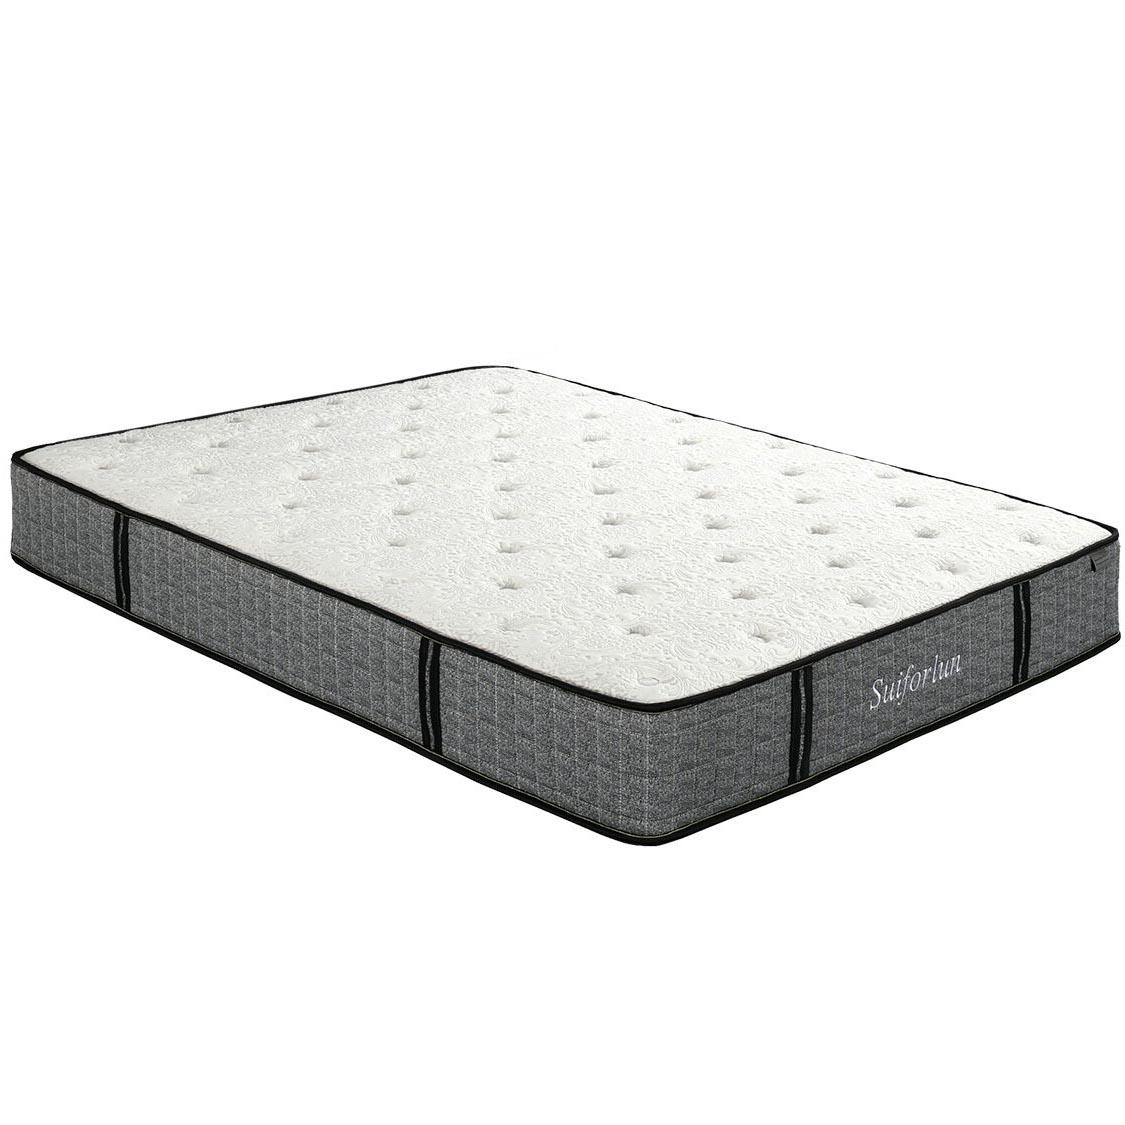 Suiforlun mattress breathable hybrid mattress king customized for family-2